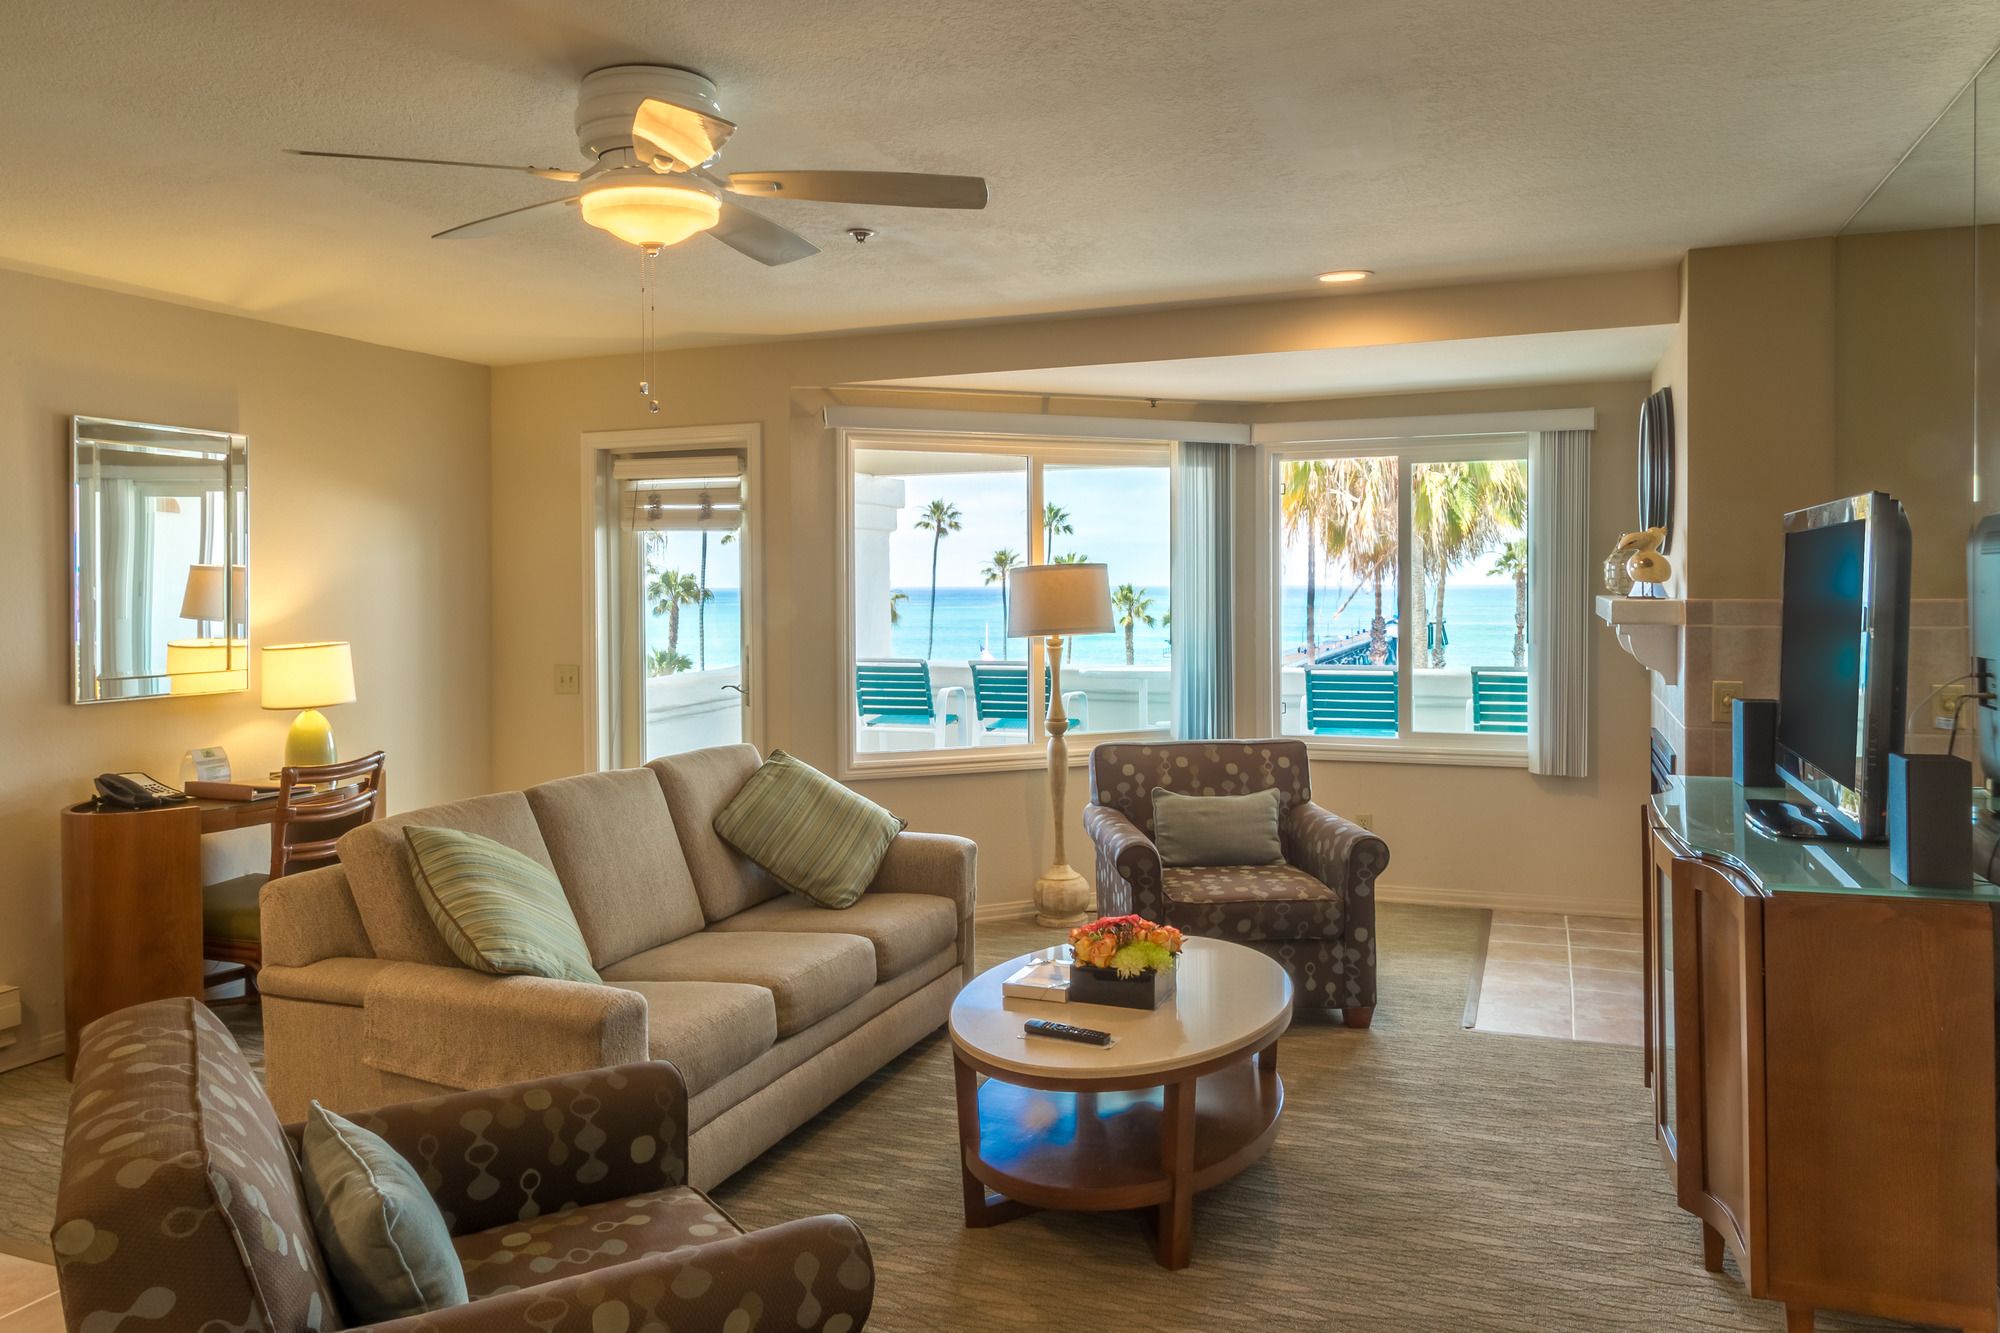 San Clemente Cove Resort Condos